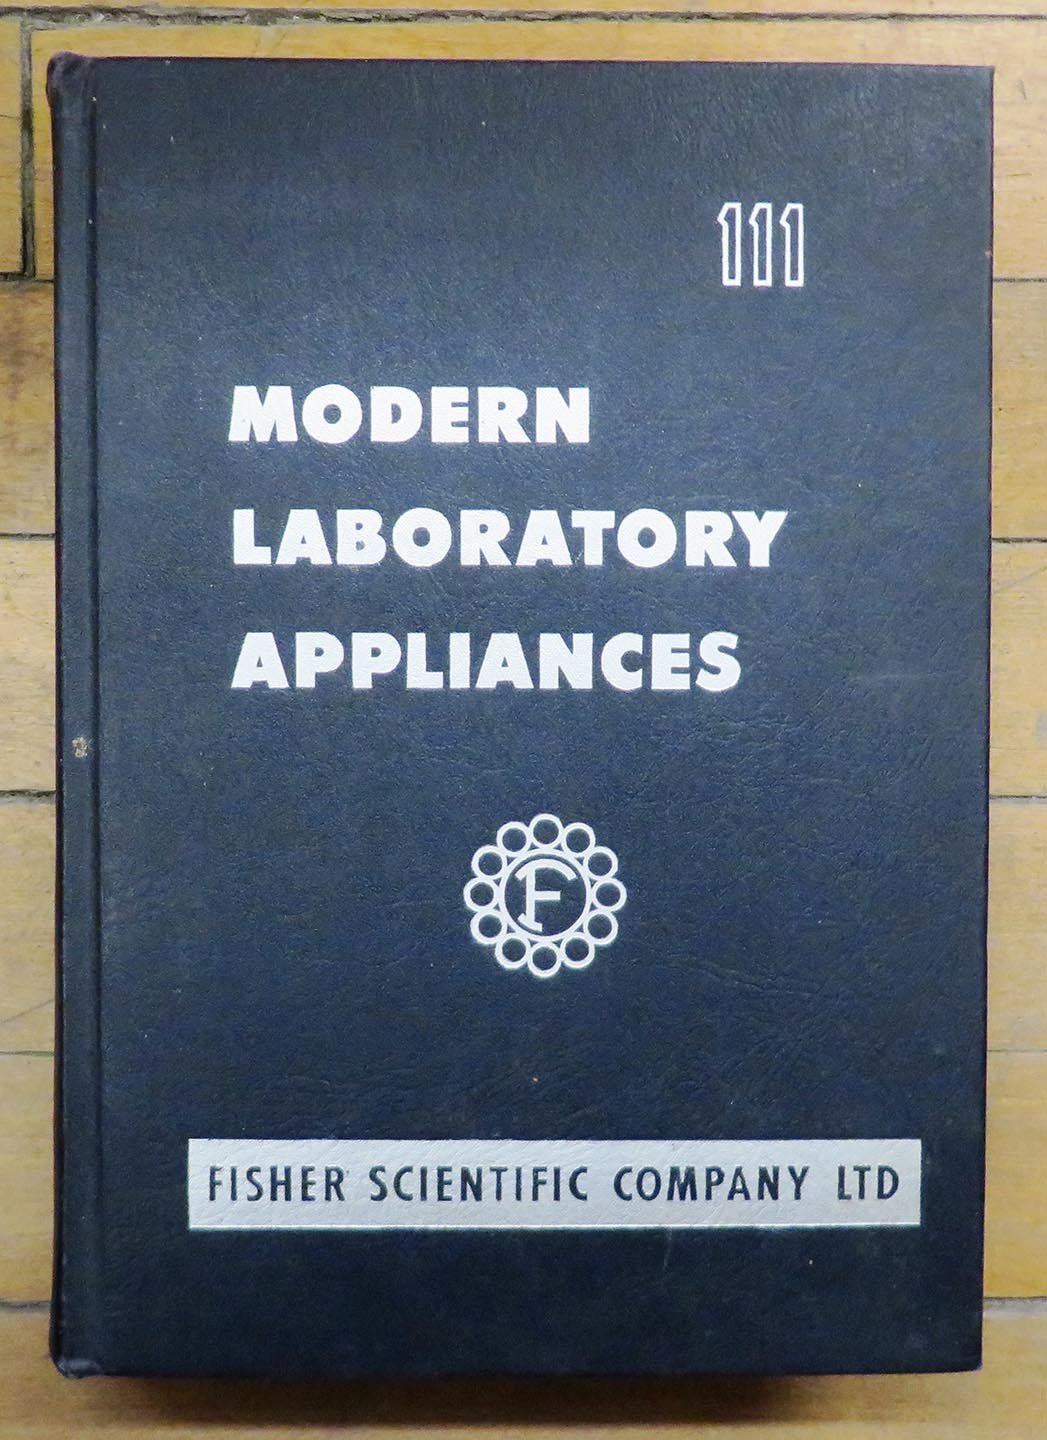 Fisher's Modern Laboratory Appliances catalogue 1952